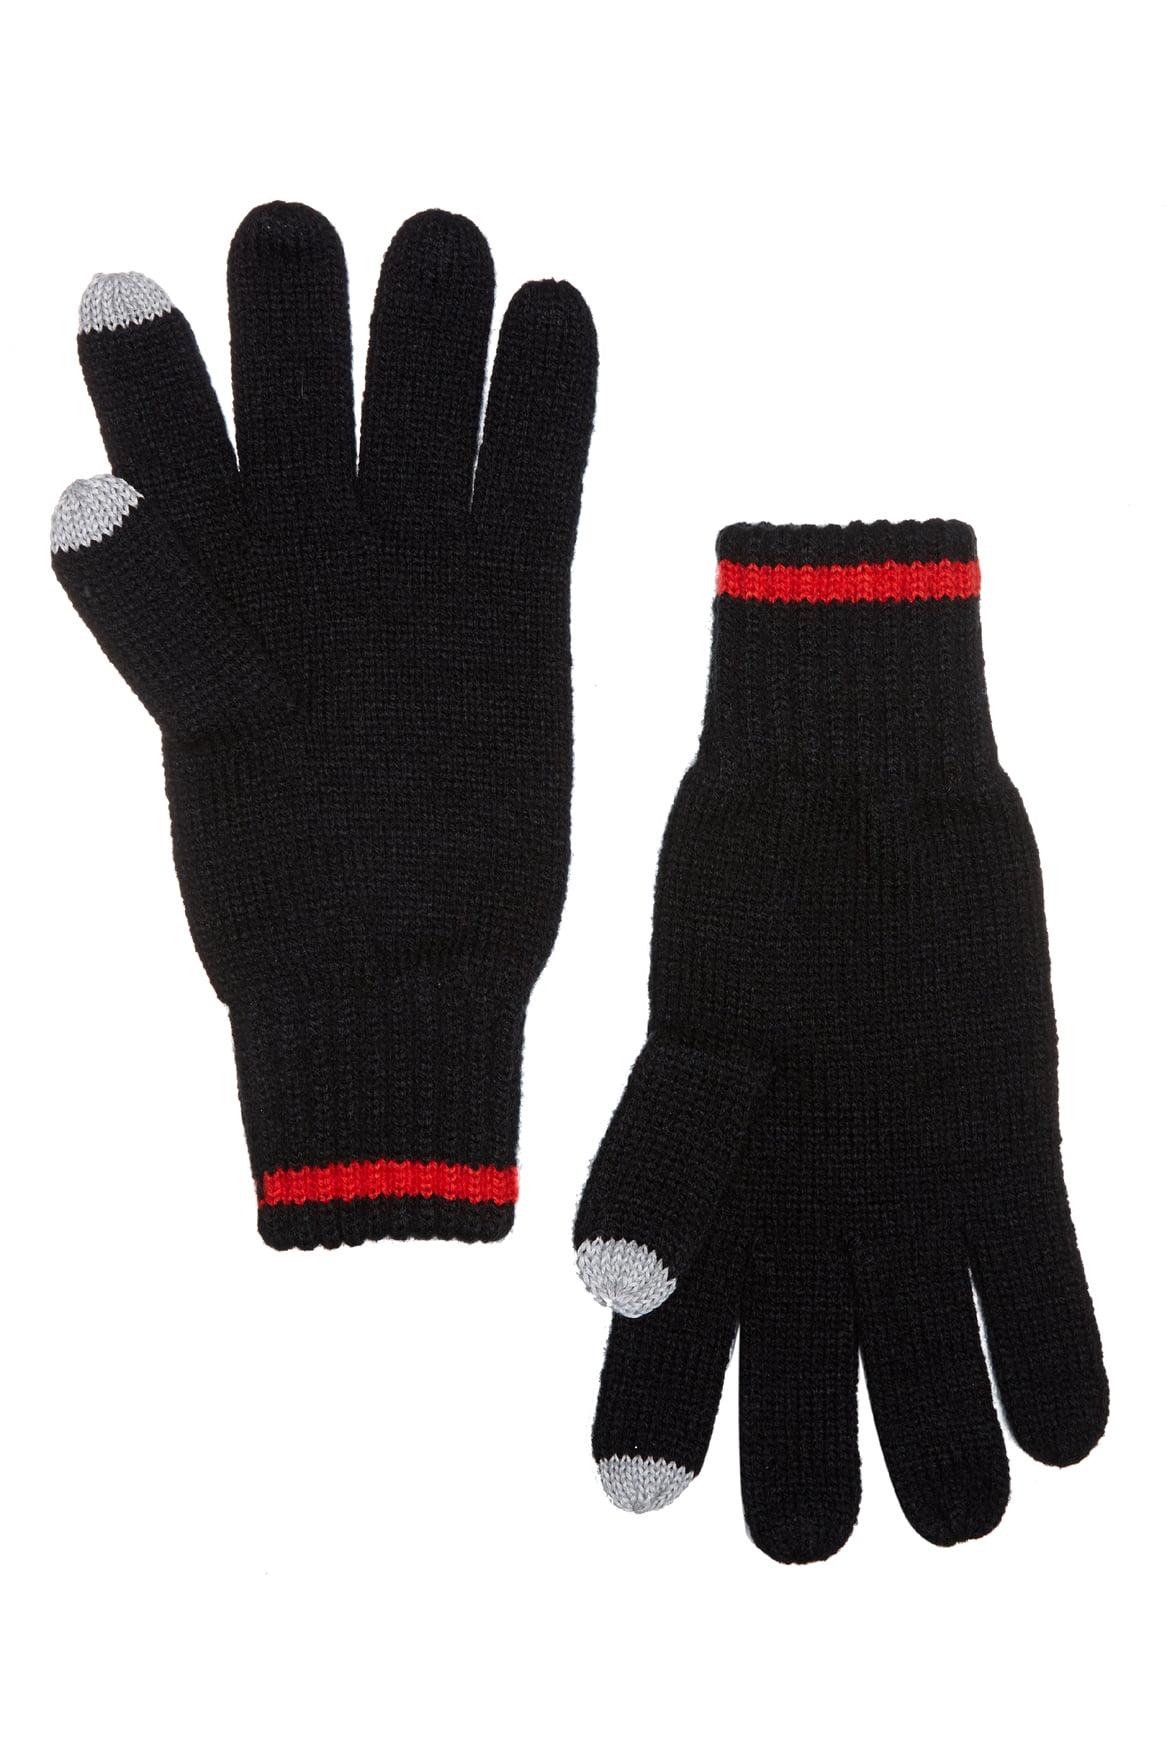 Unisex Adult Ferrari Logo Gloves Knitted with Touch Screen Fingertips 